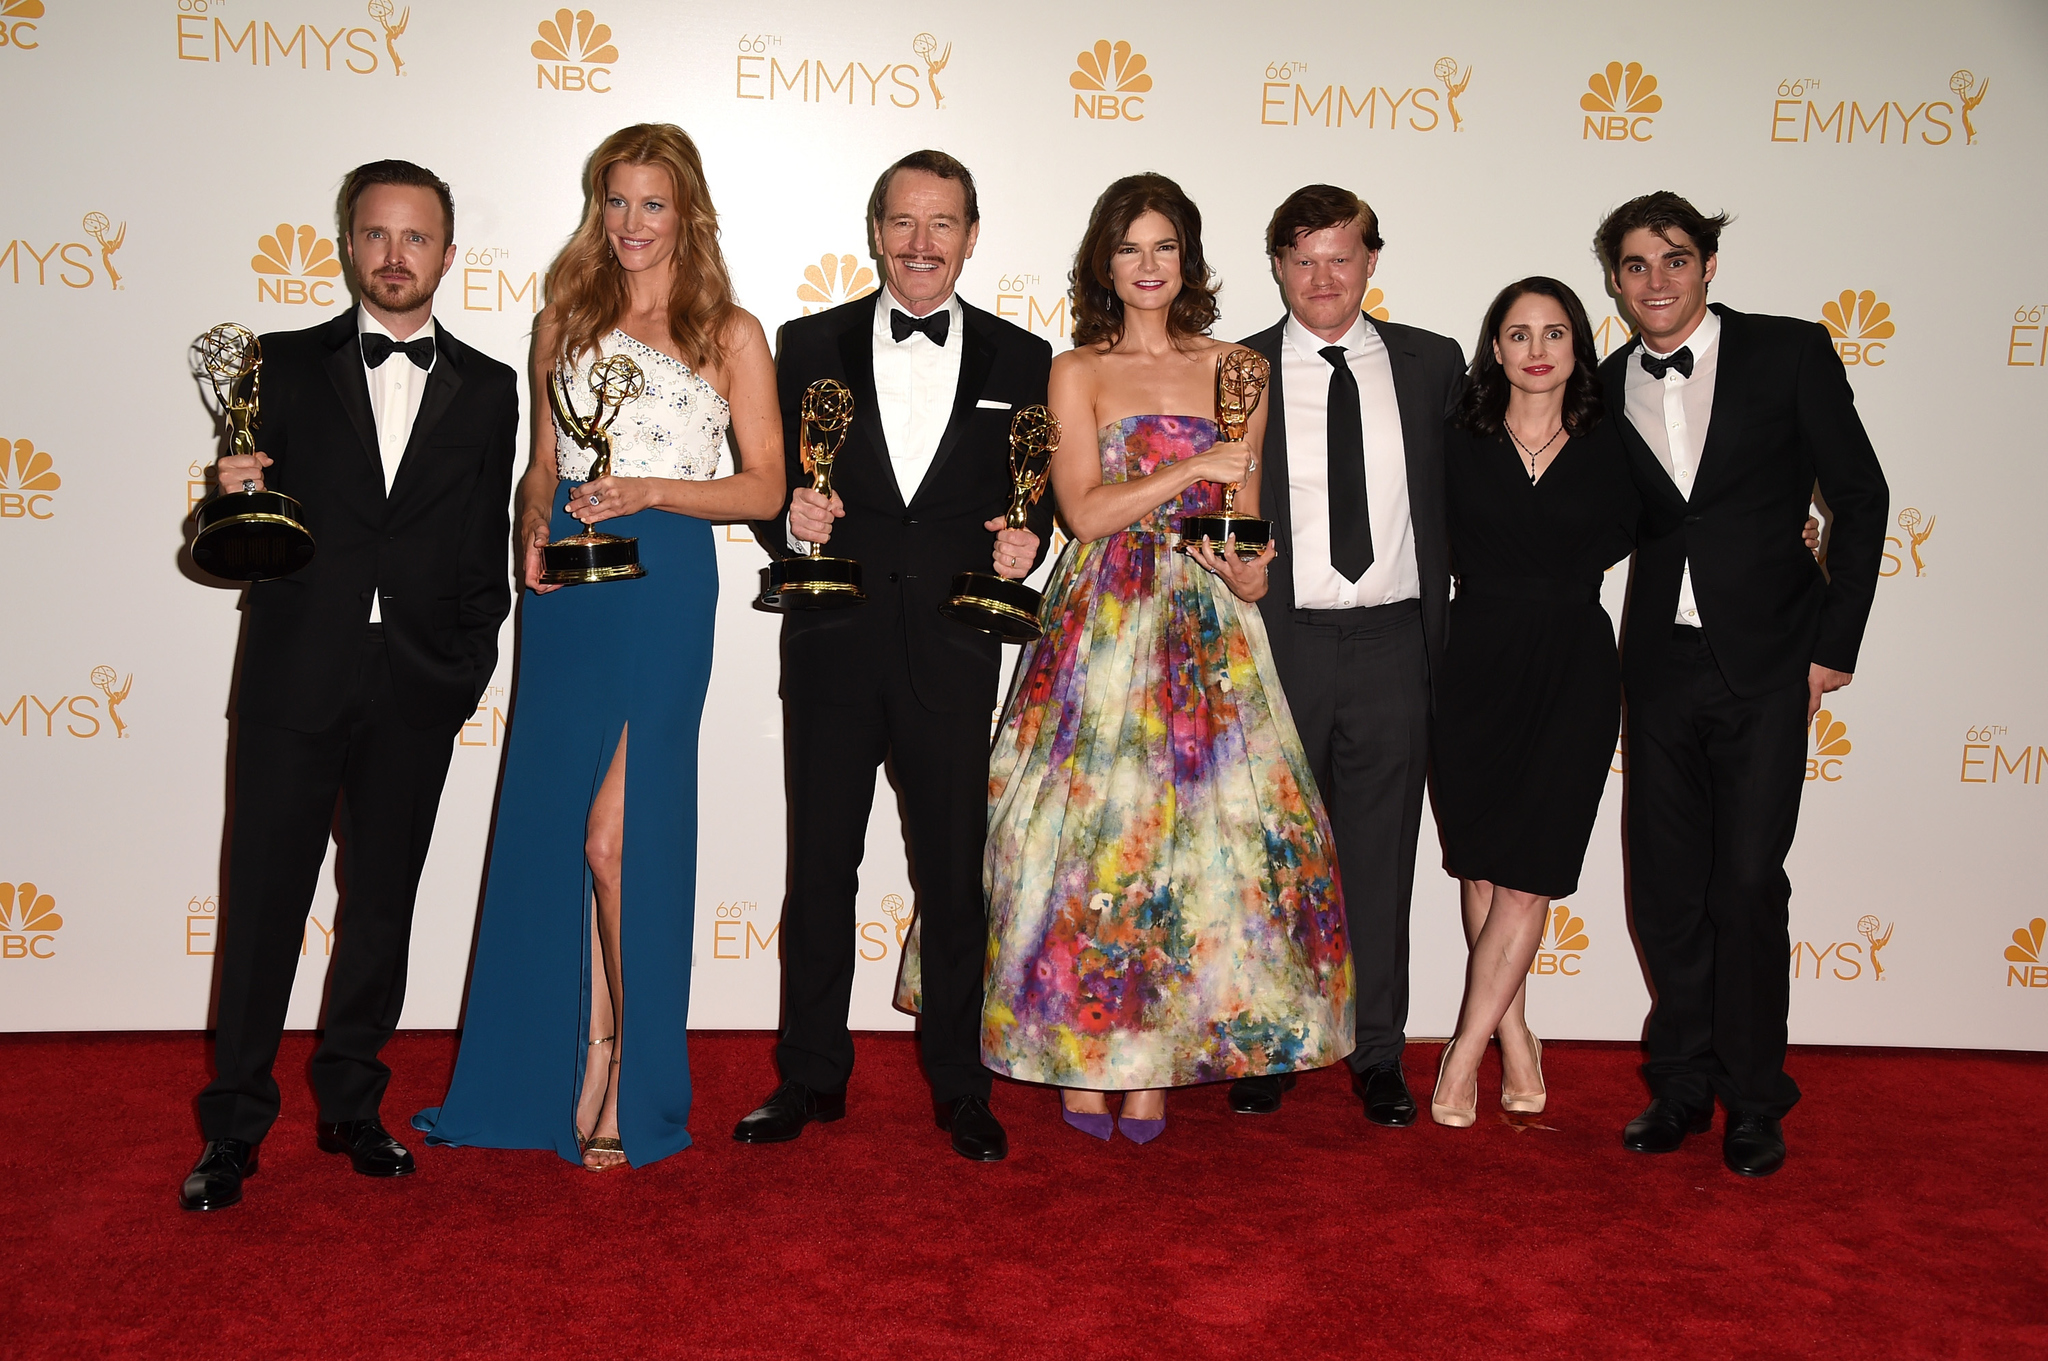 Bryan Cranston, Laura Fraser, Anna Gunn, Aaron Paul, Jesse Plemons, Betsy Brandt and RJ Mitte at event of The 66th Primetime Emmy Awards (2014)